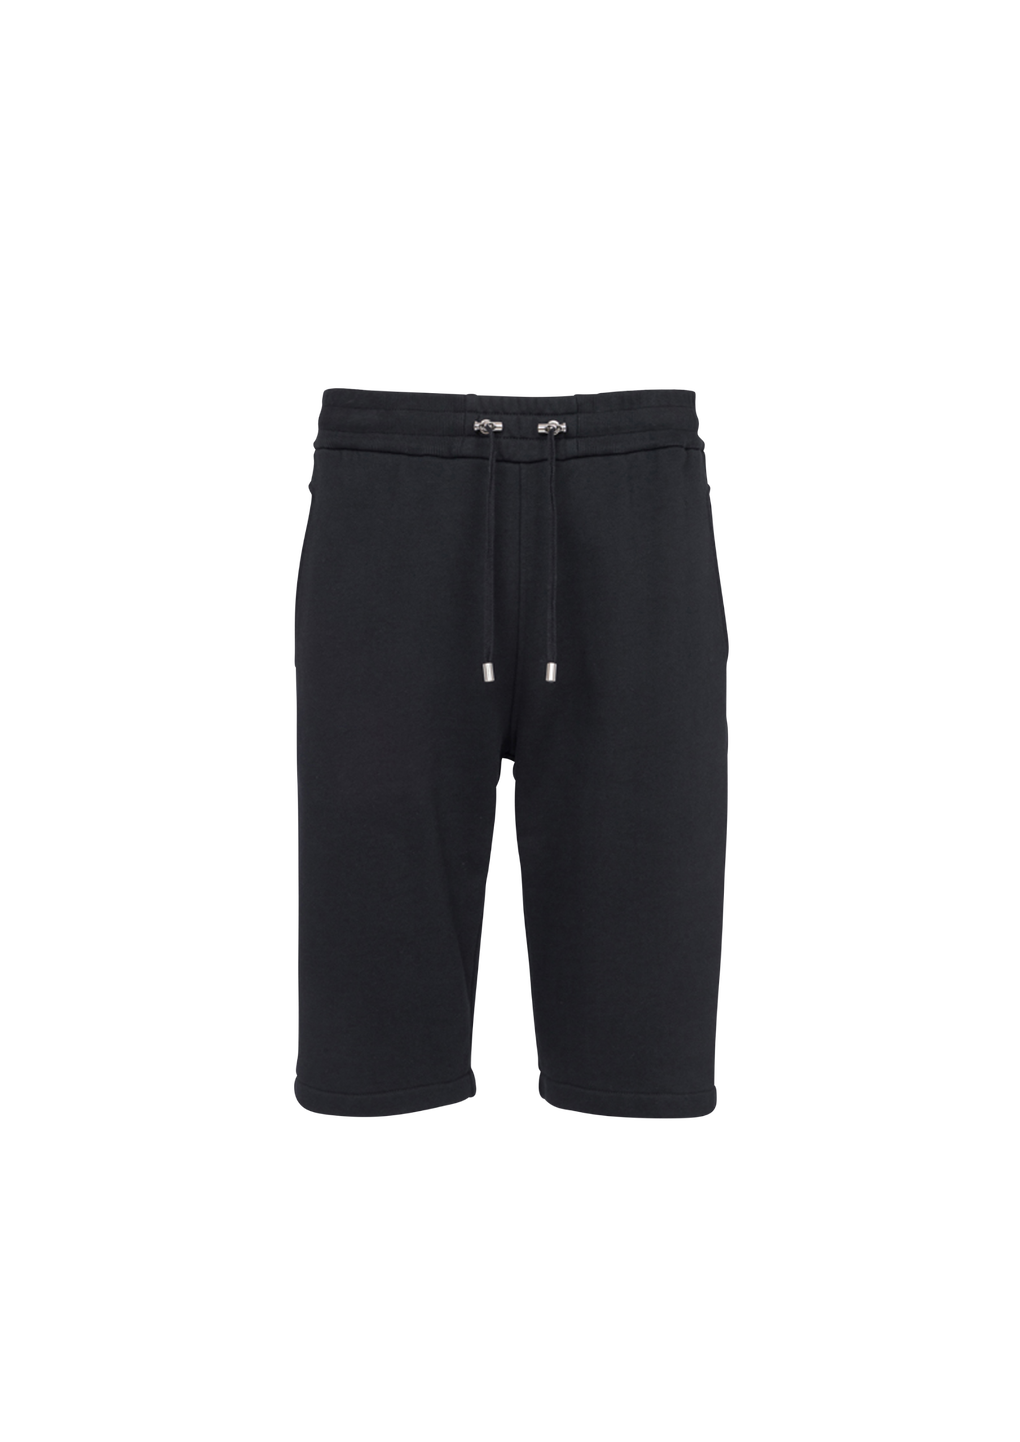 Cotton shorts with flocked Balmain Paris logo, black, hi-res